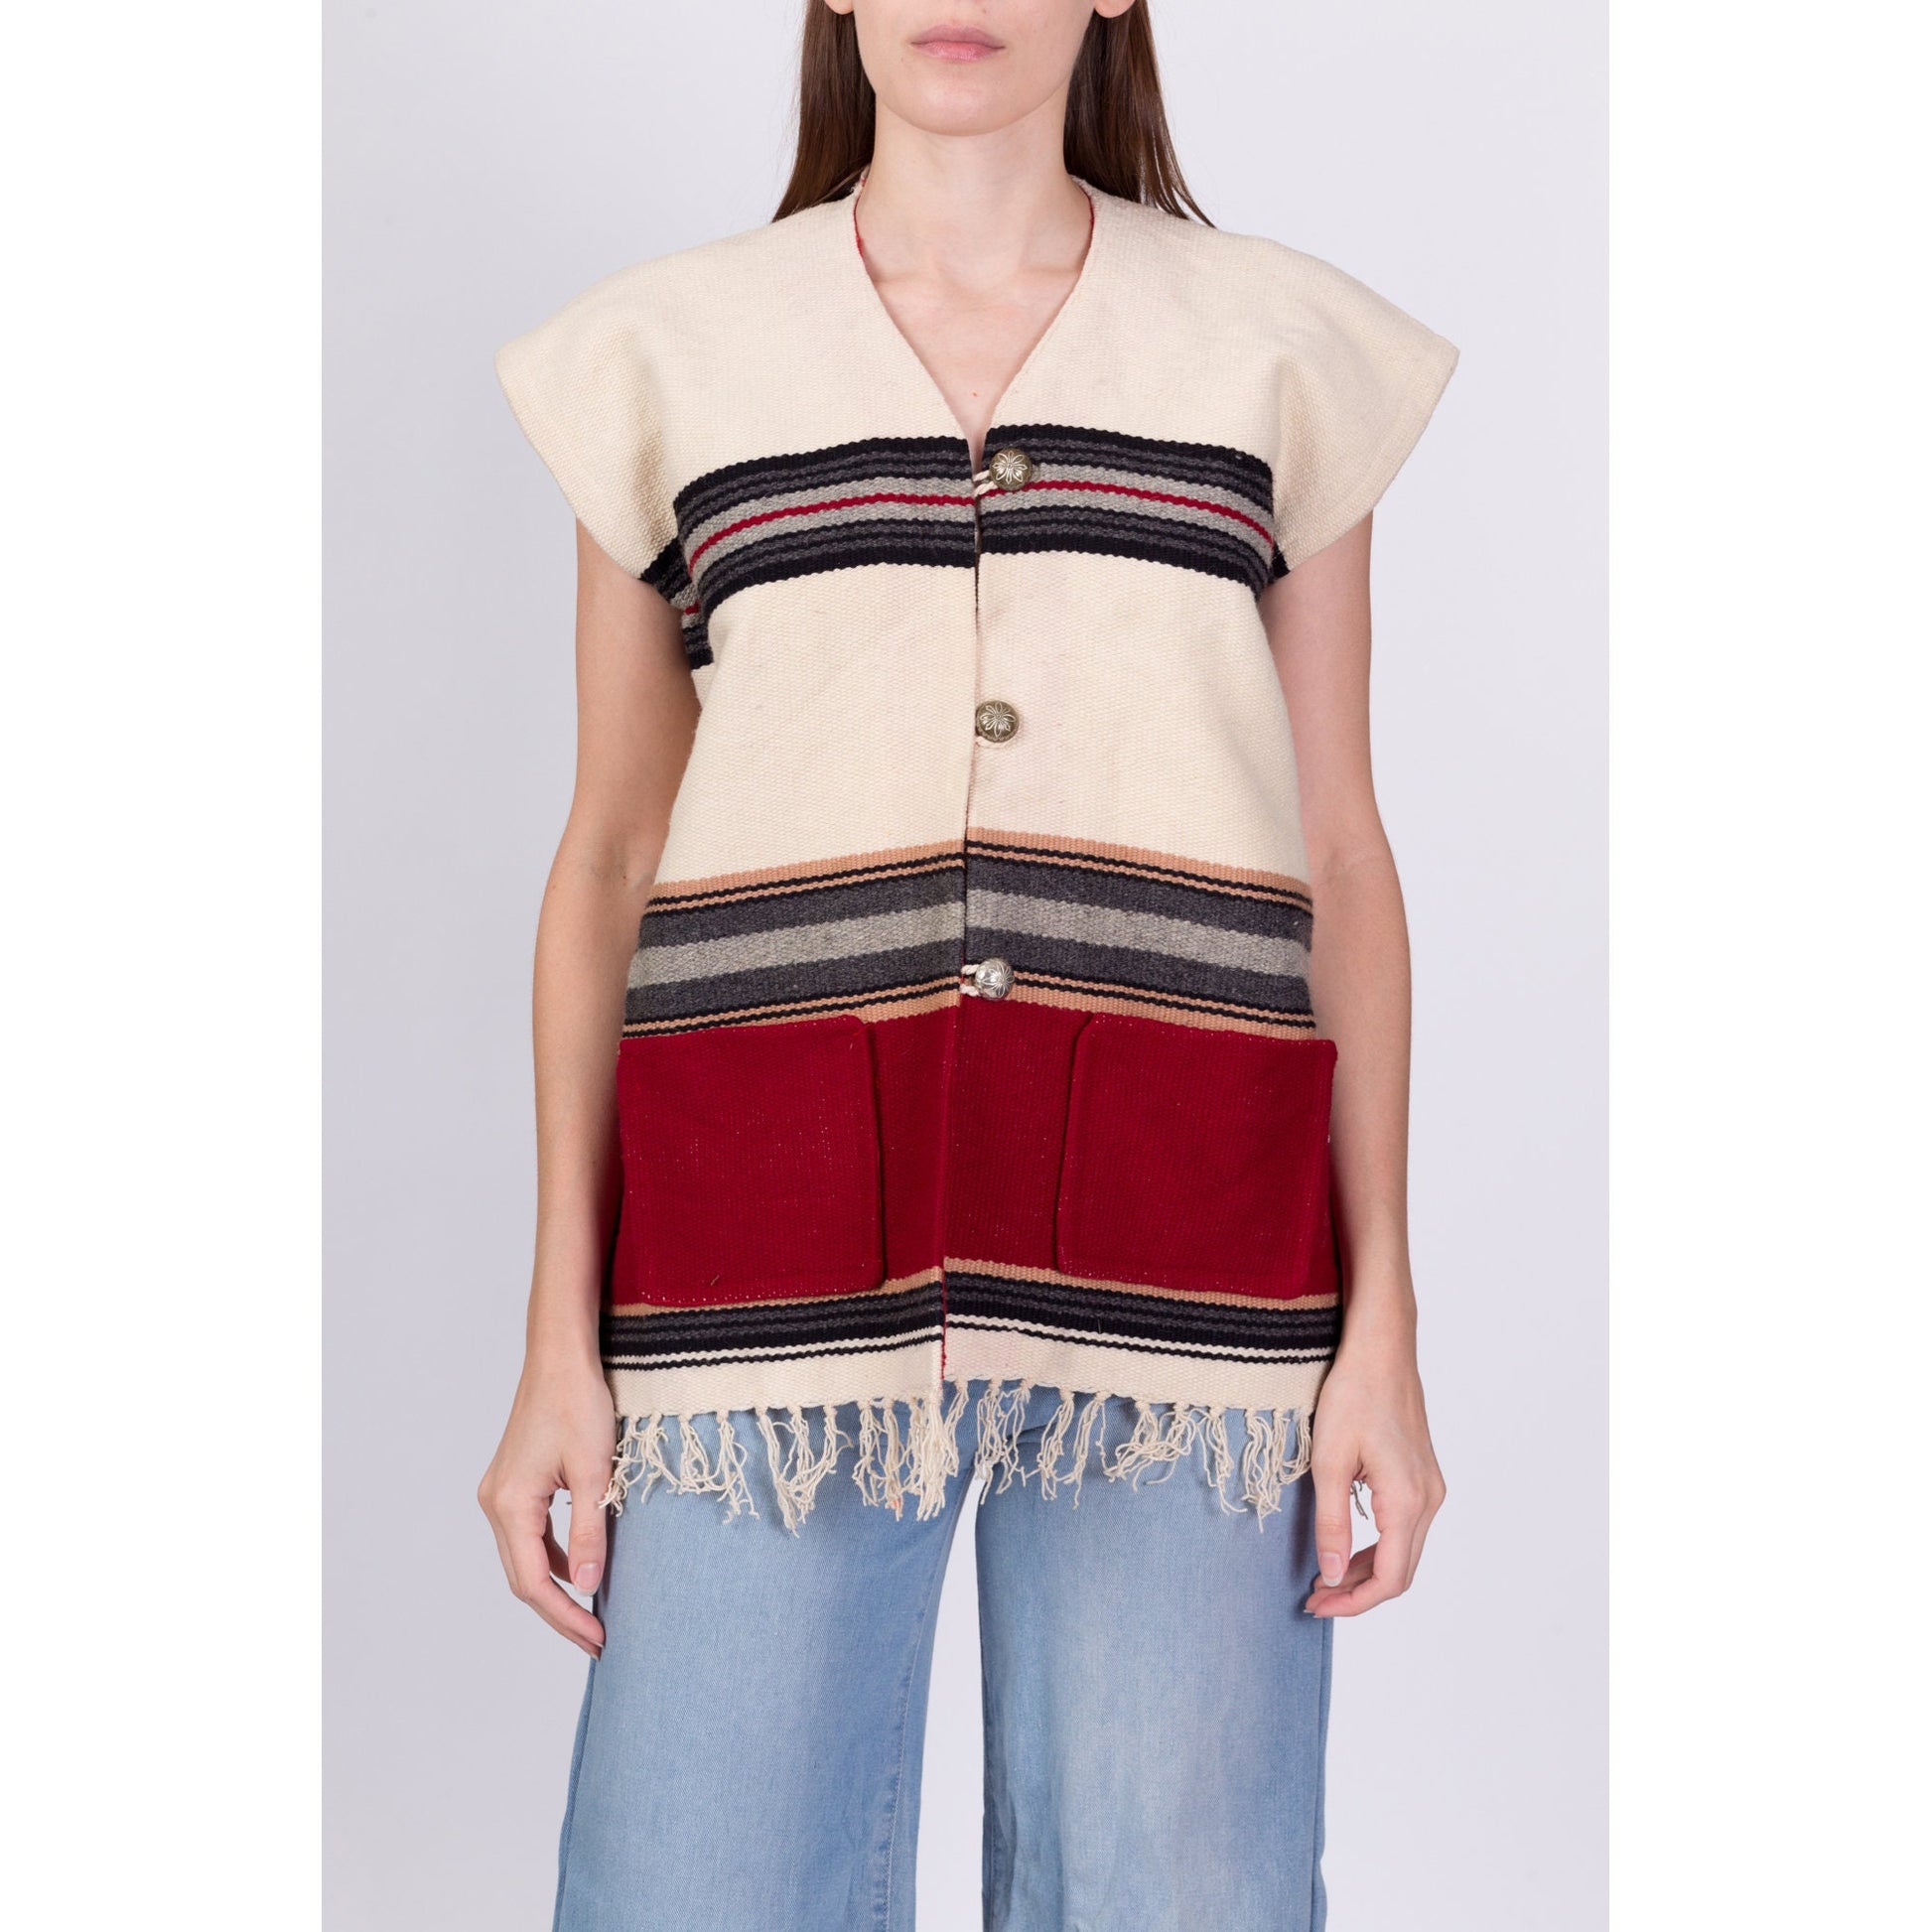 Vintage 1950s Chimayo Blanket Vest - Men's Medium, Women's Large 